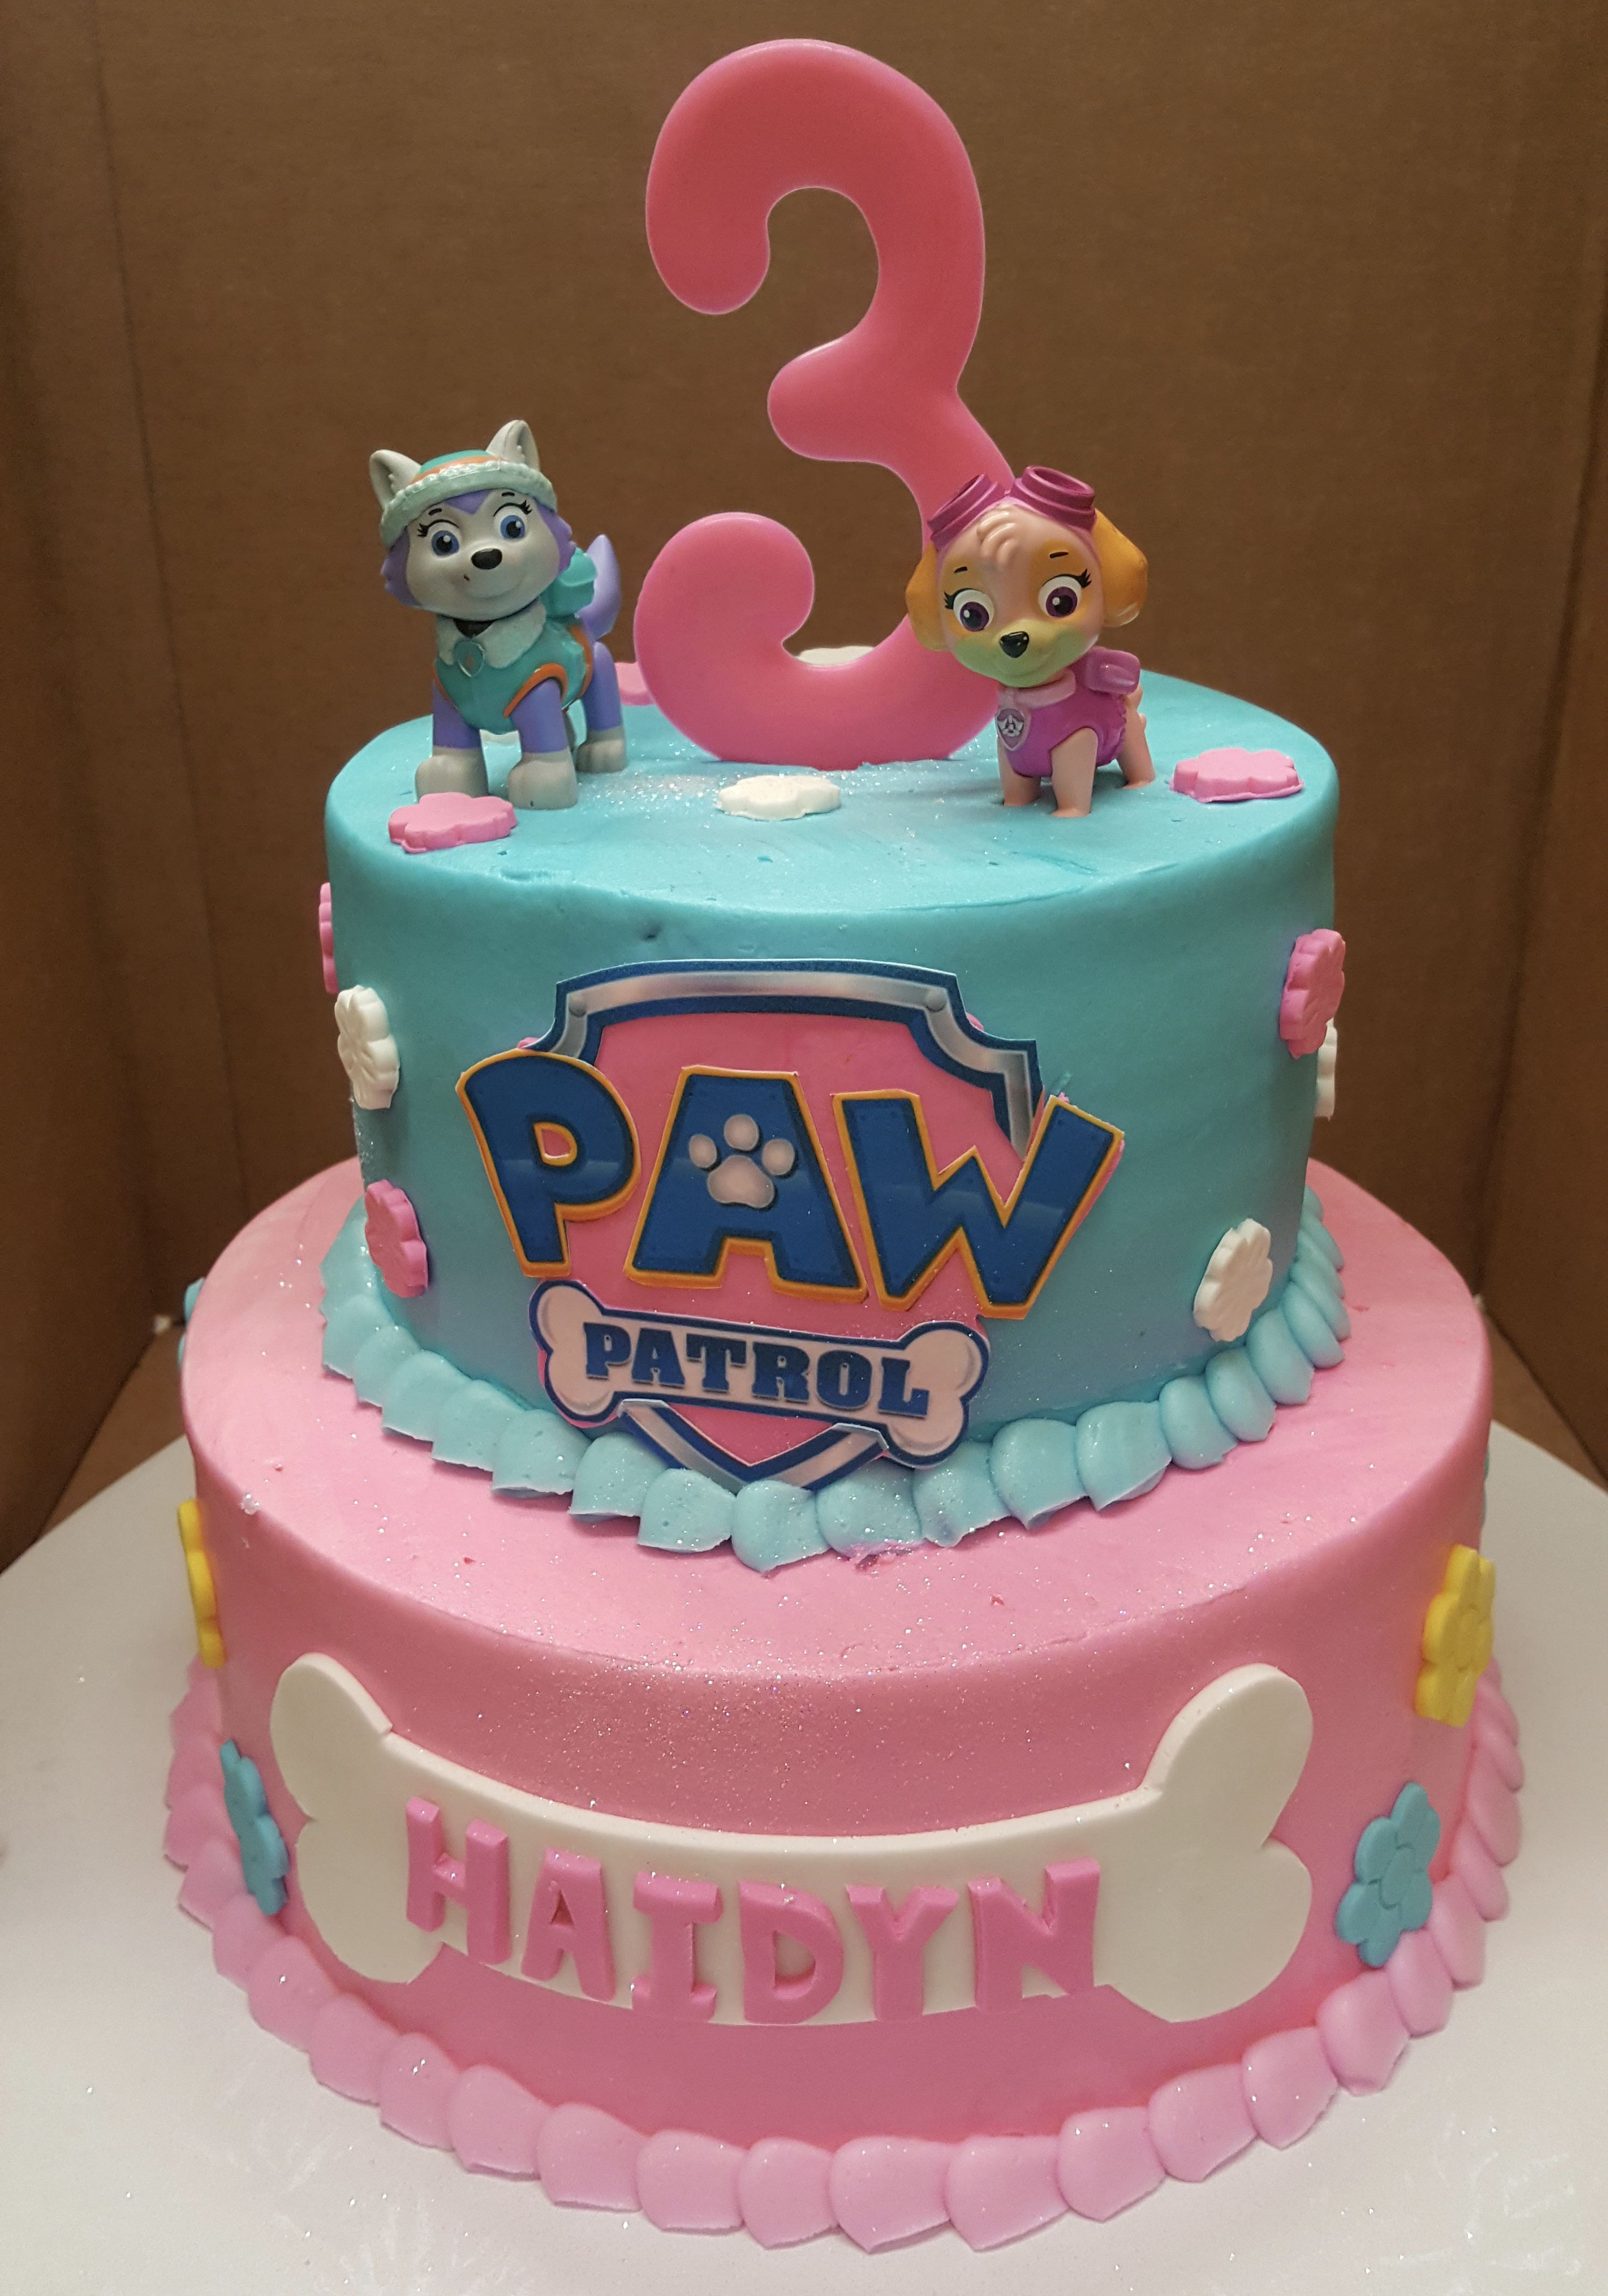 Best ideas about Paw Patrol Girl Birthday Cake
. Save or Pin Calumet Bakery Girls Paw Patrol Cake Now.